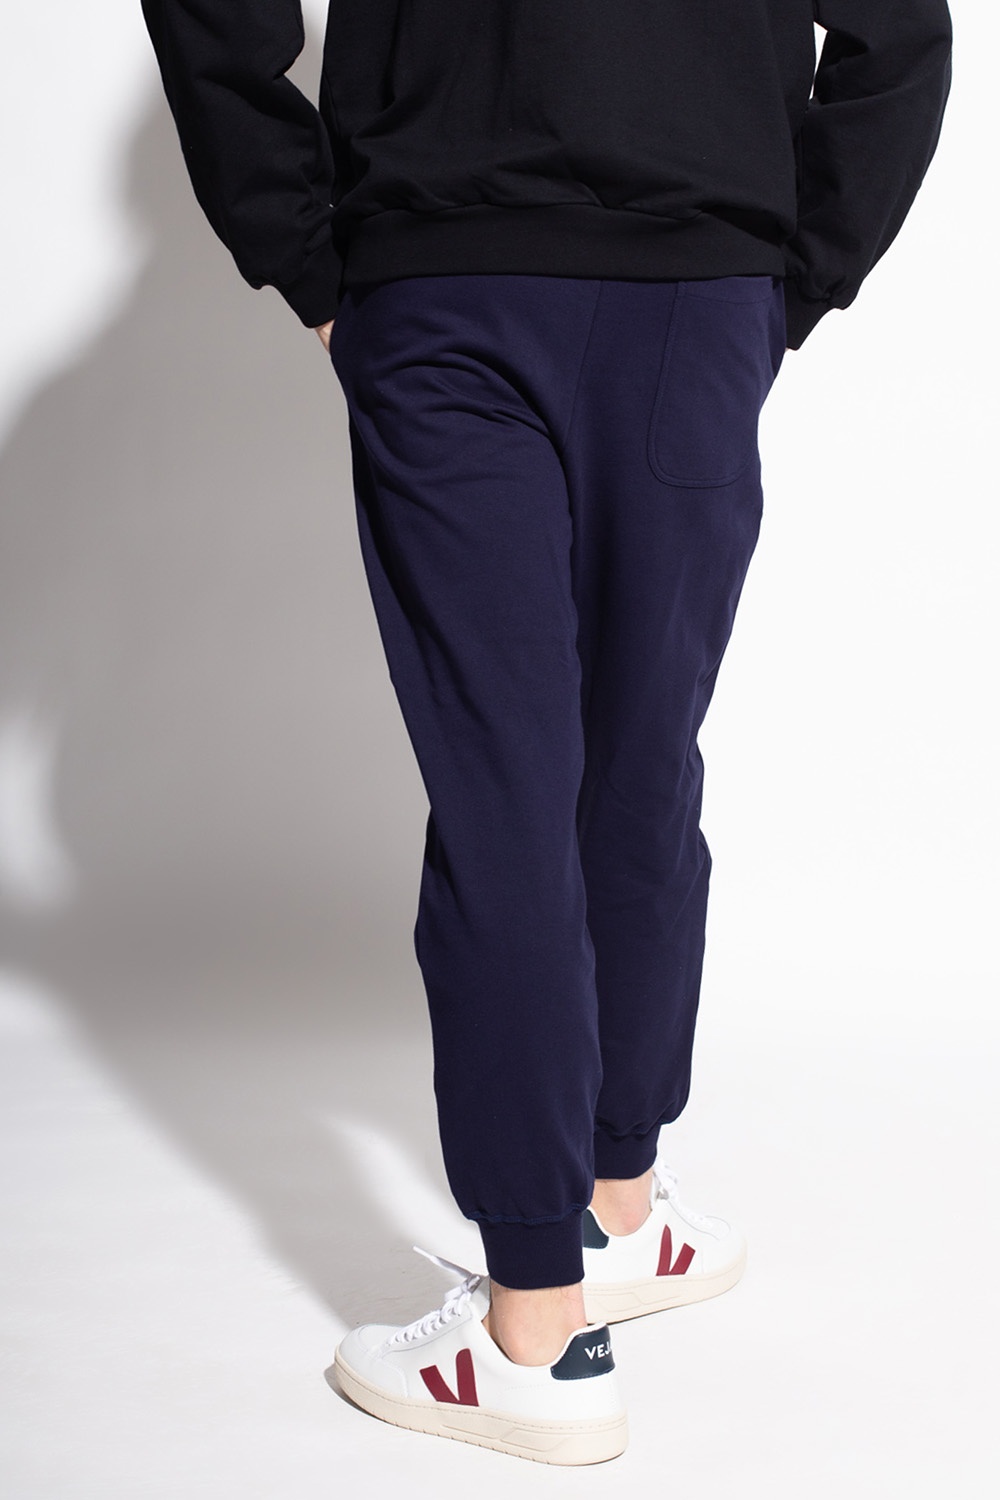 Vivienne Westwood Pepe Jeans Camicia da donna 'Abigail' navy rosso crema